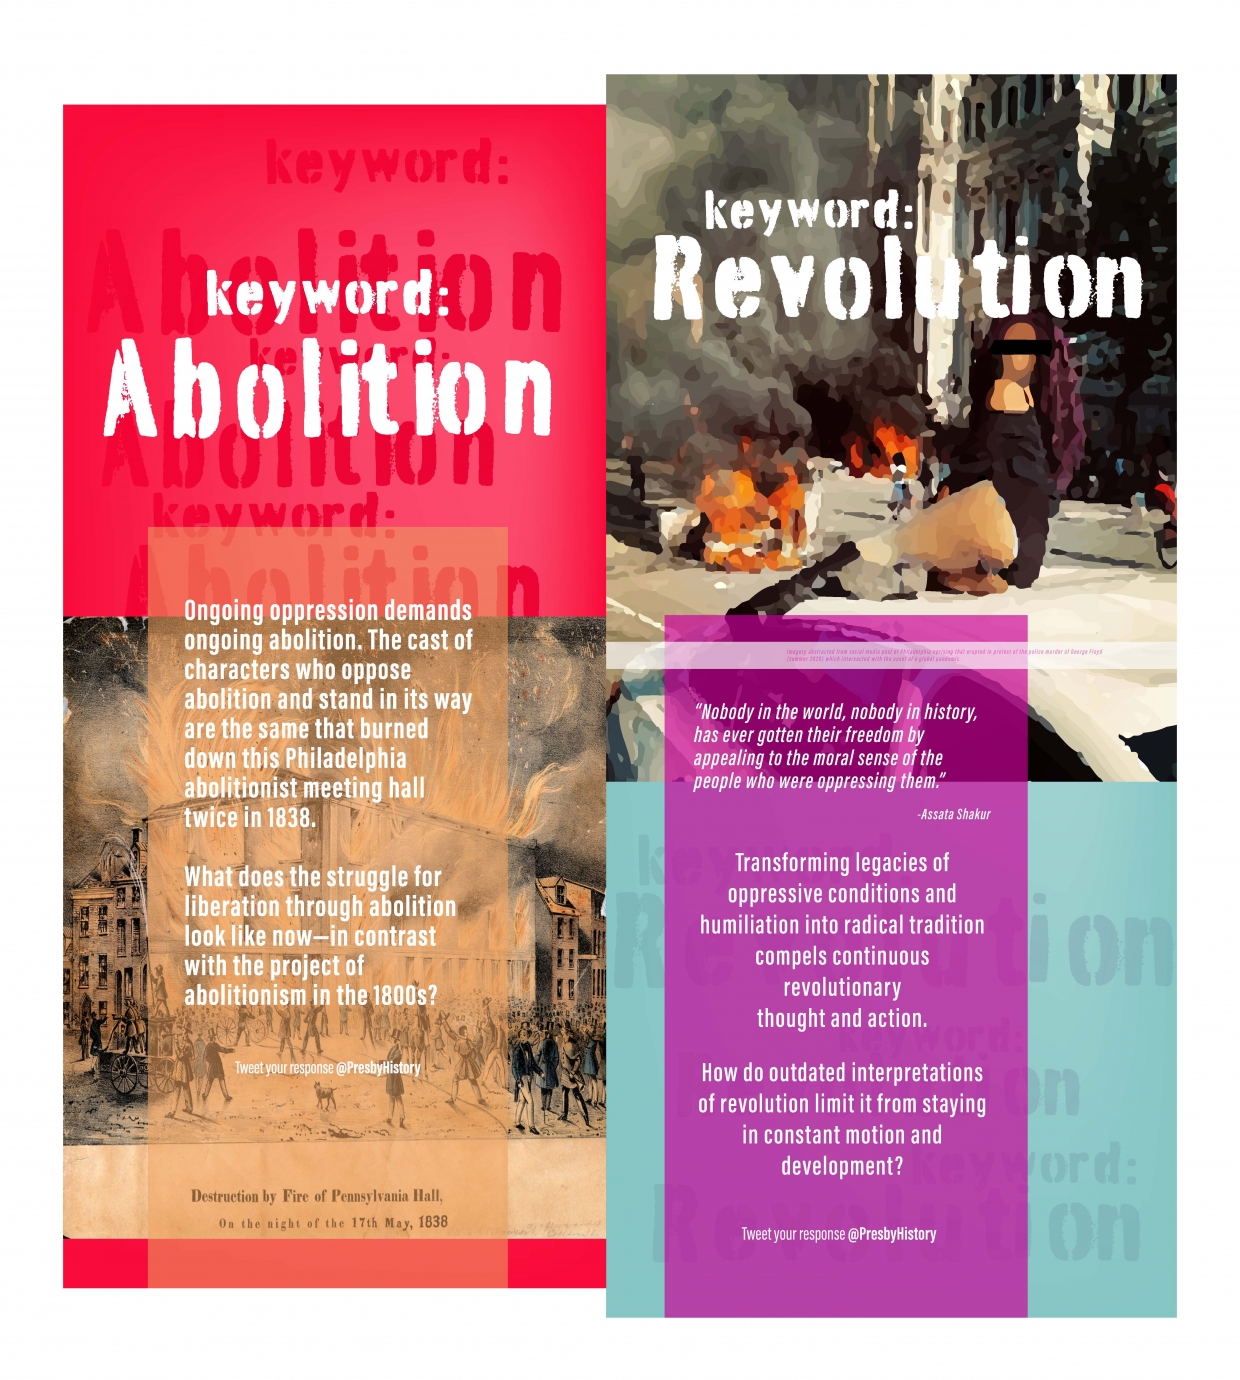 keyword: Abolition | keyword: Revolution (panels)